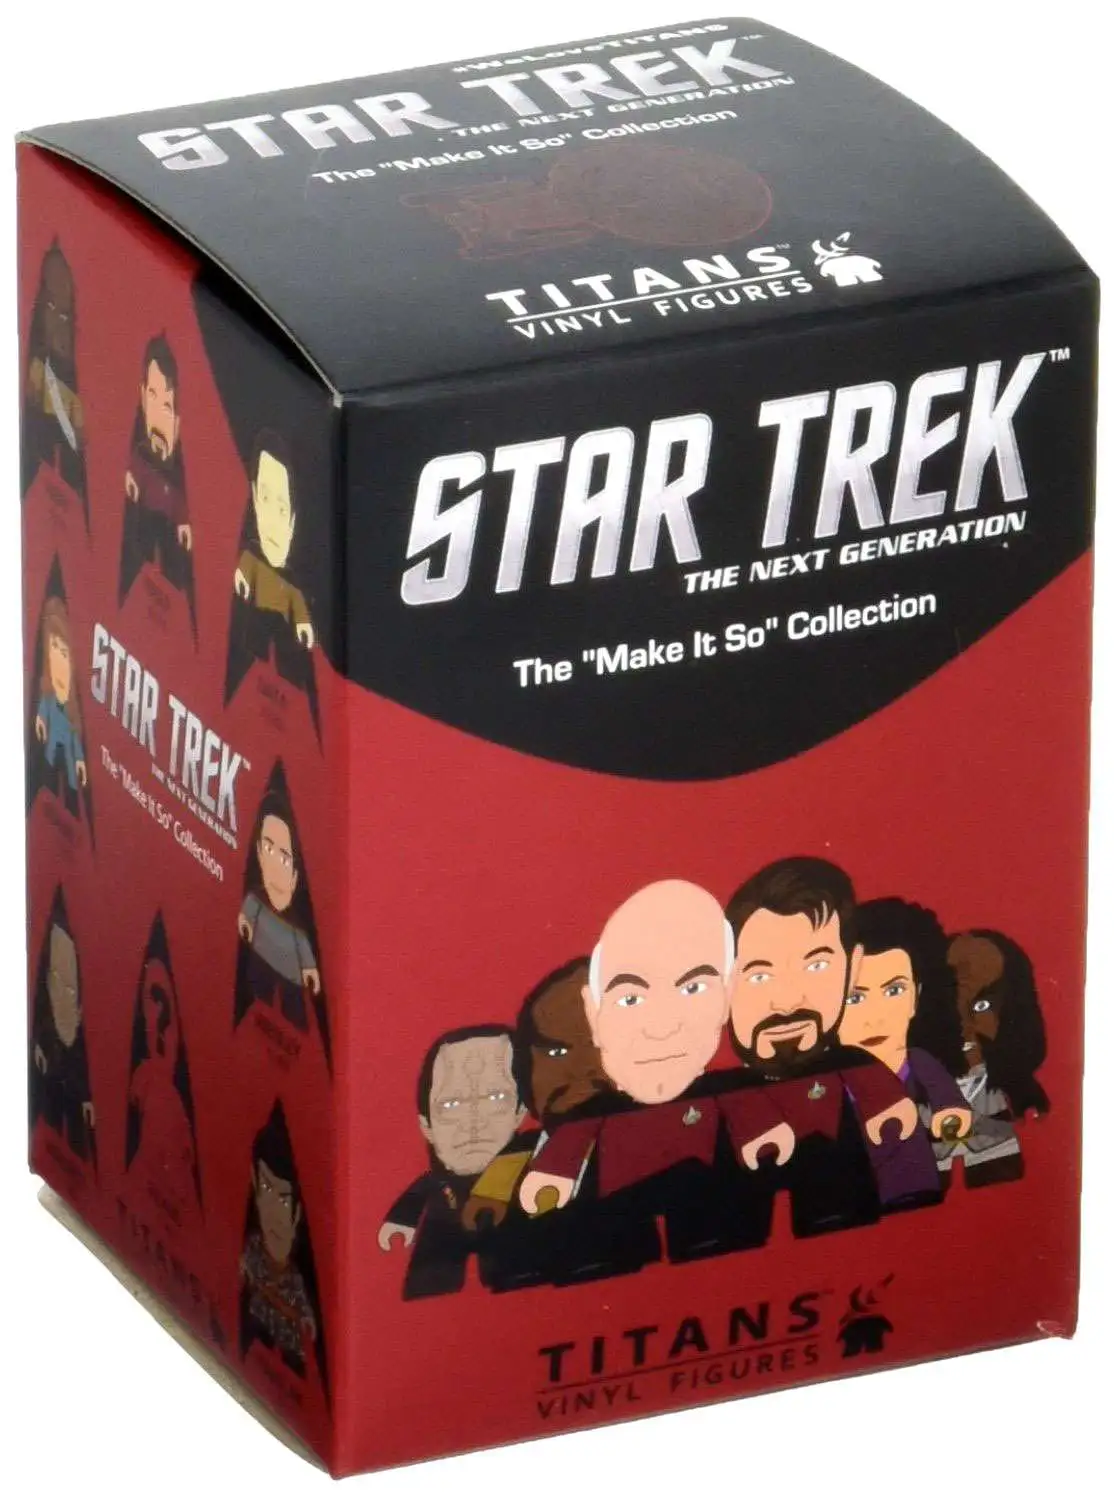 The Next Generation "Make It So" Collection 3" Titans vinyl figures Star Trek 